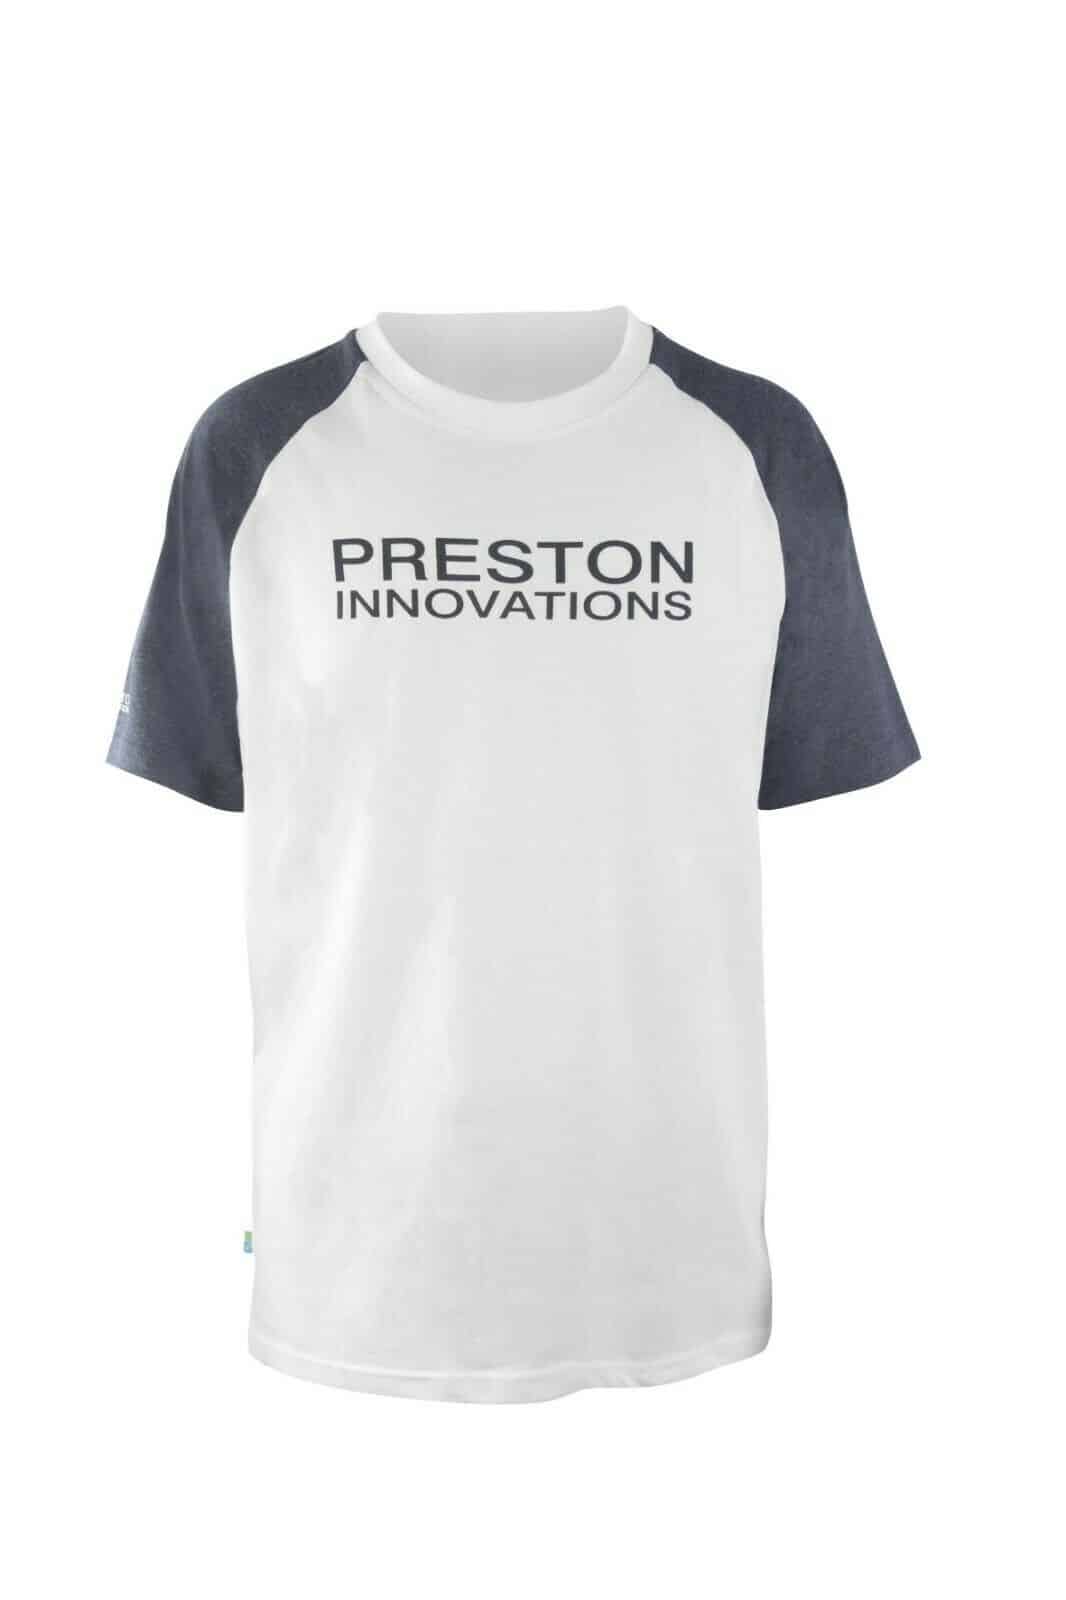 Preston Innovations* Brand New * Black / White Fishing T- Shirts